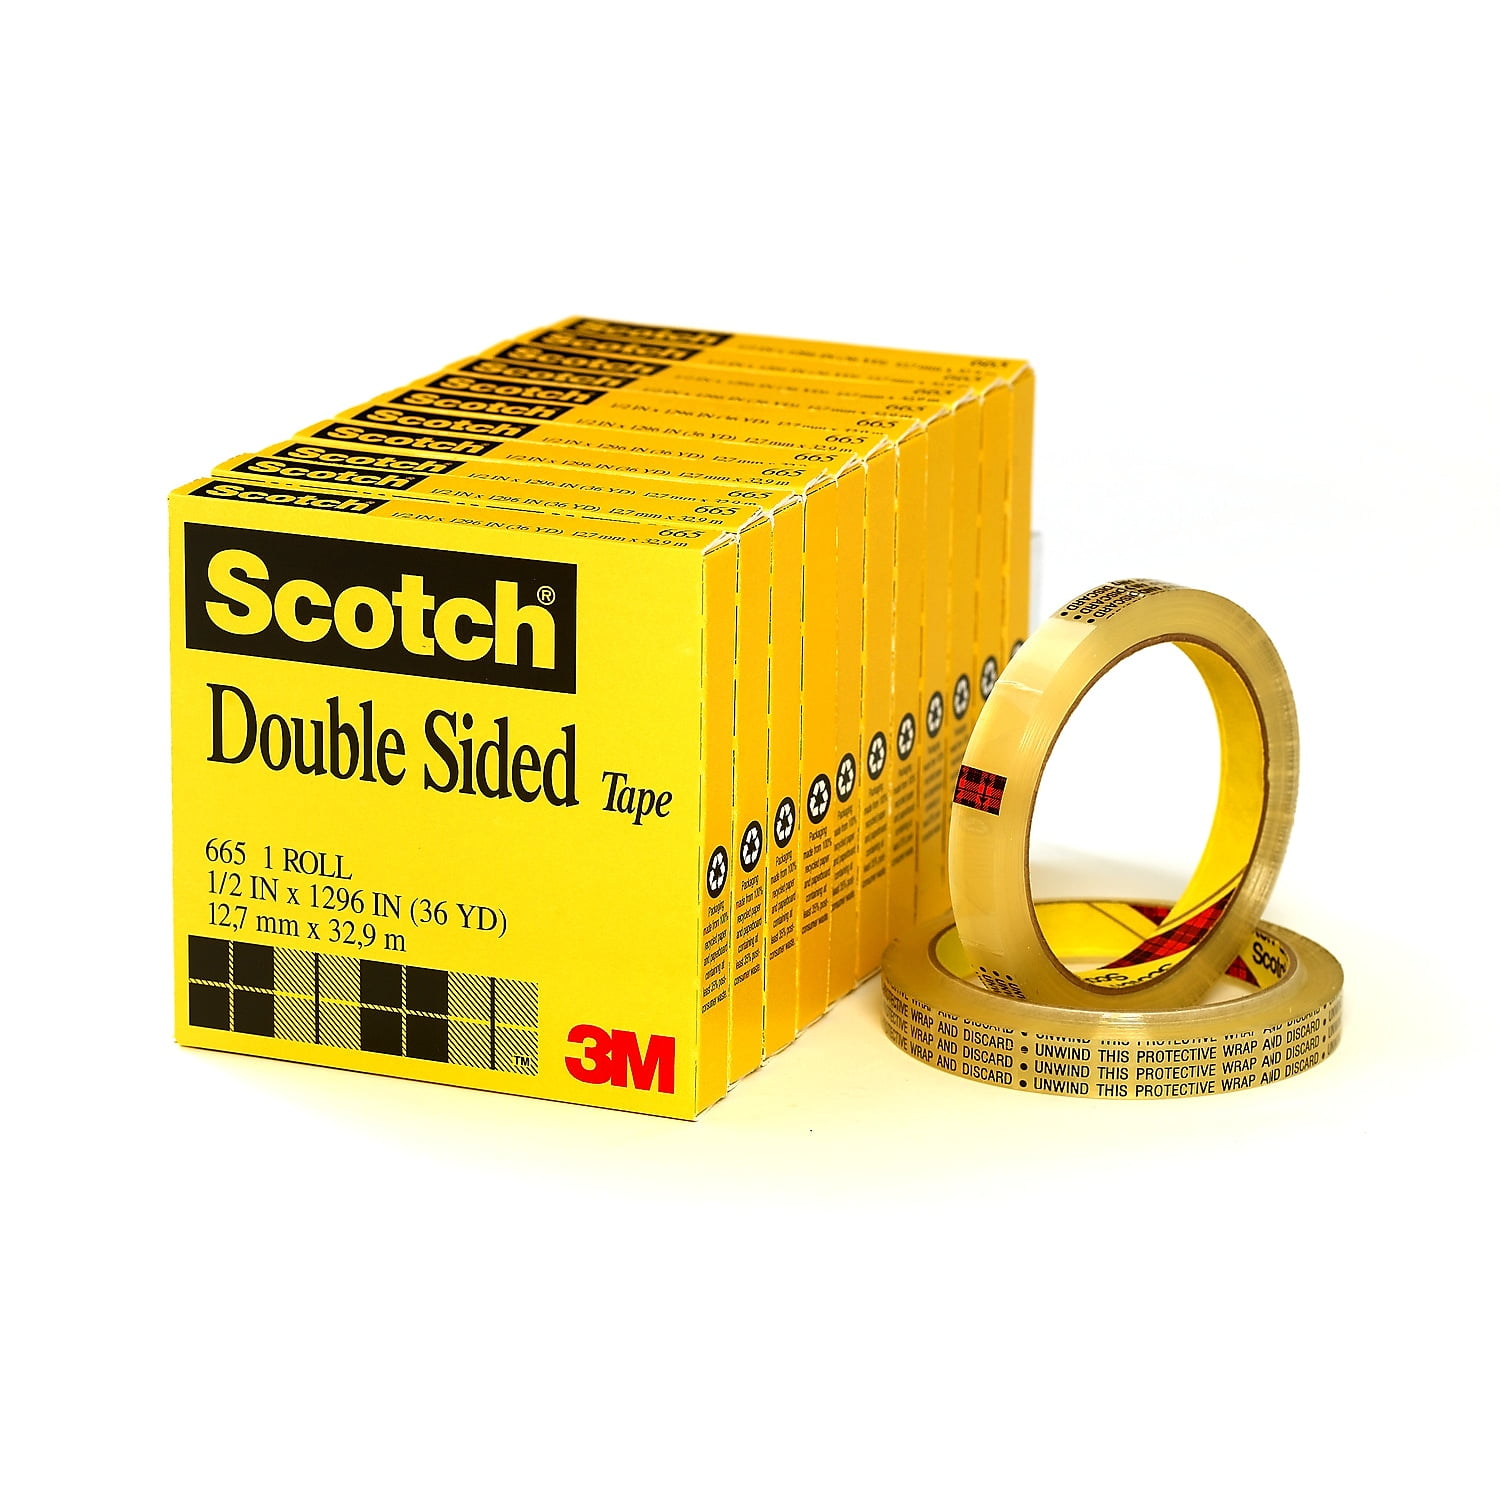 scotch removable tape, 19 mm x 32,9 mts, nuevo - Kaufen Neue